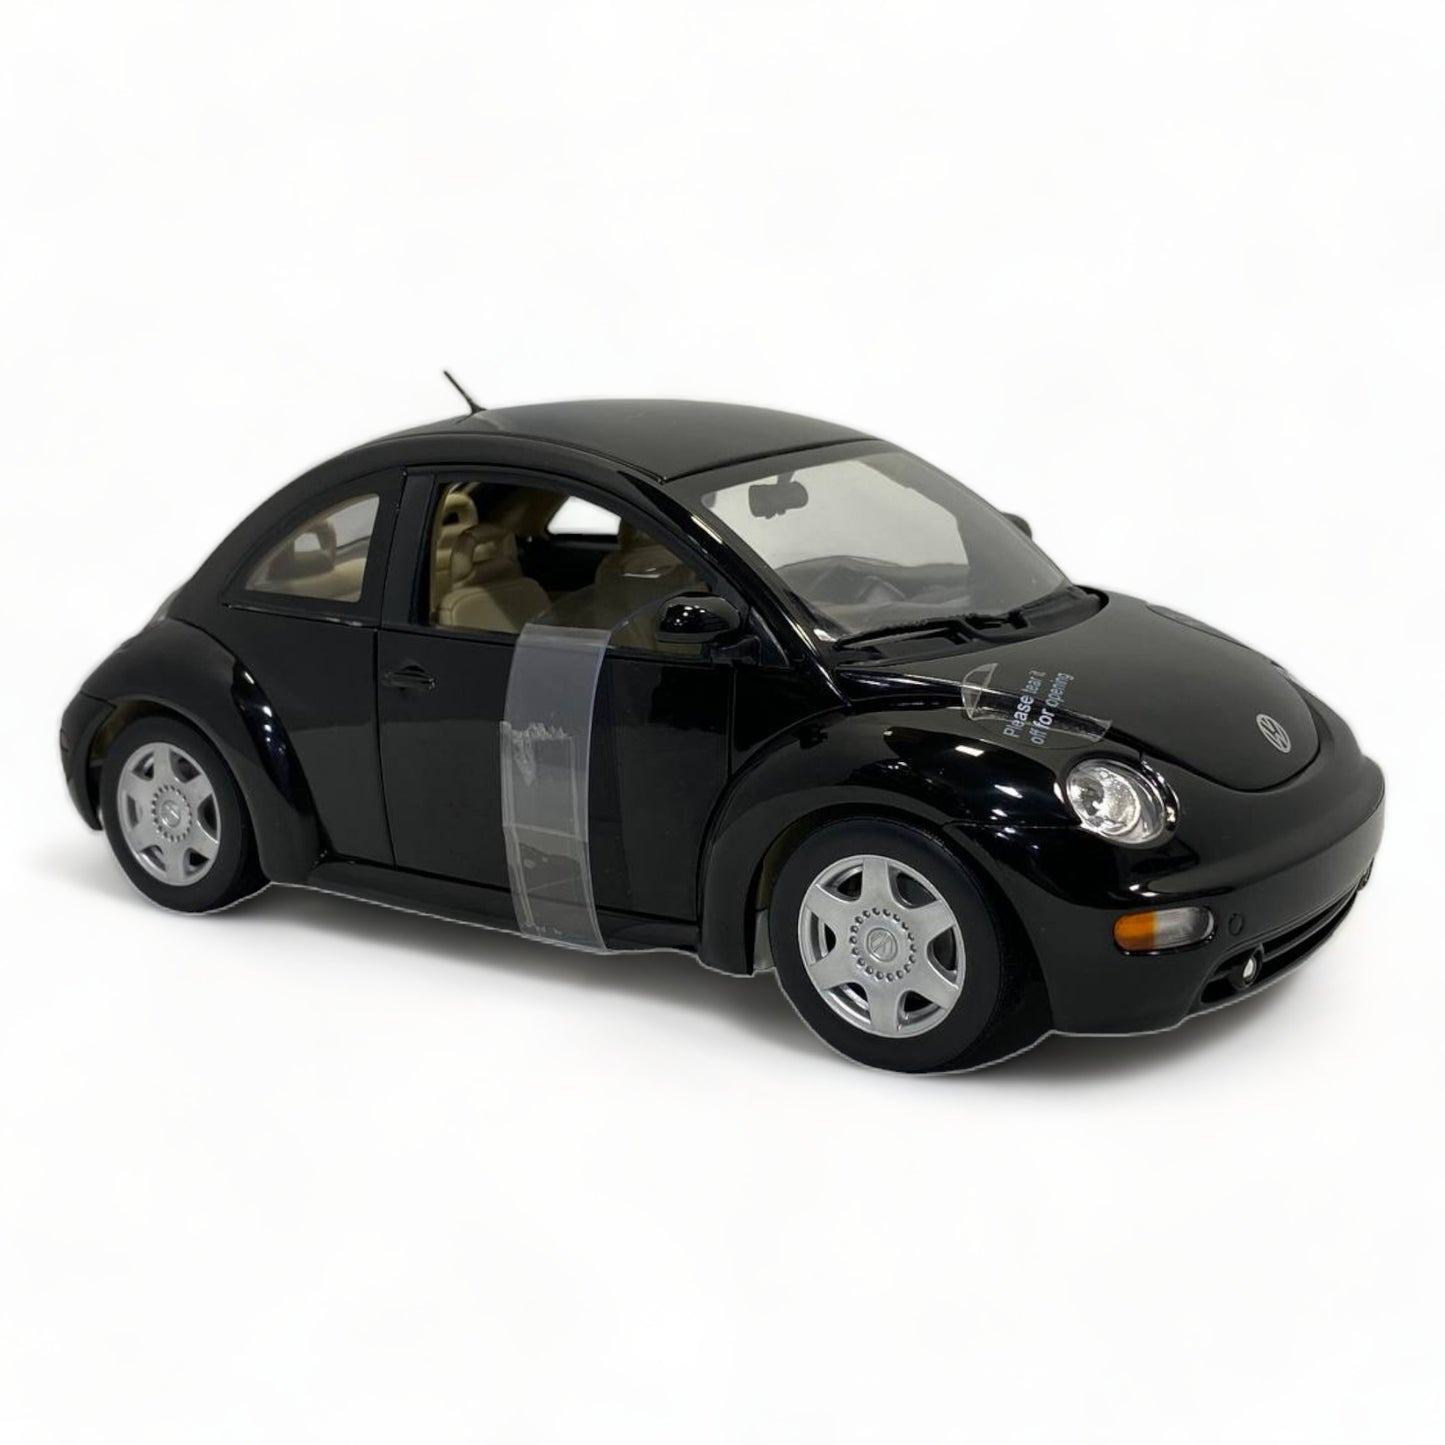 1/18 GATE G Volkswagen BEETLE COUPE BLACK Model Car|Sold in Dturman.com Dubai UAE.